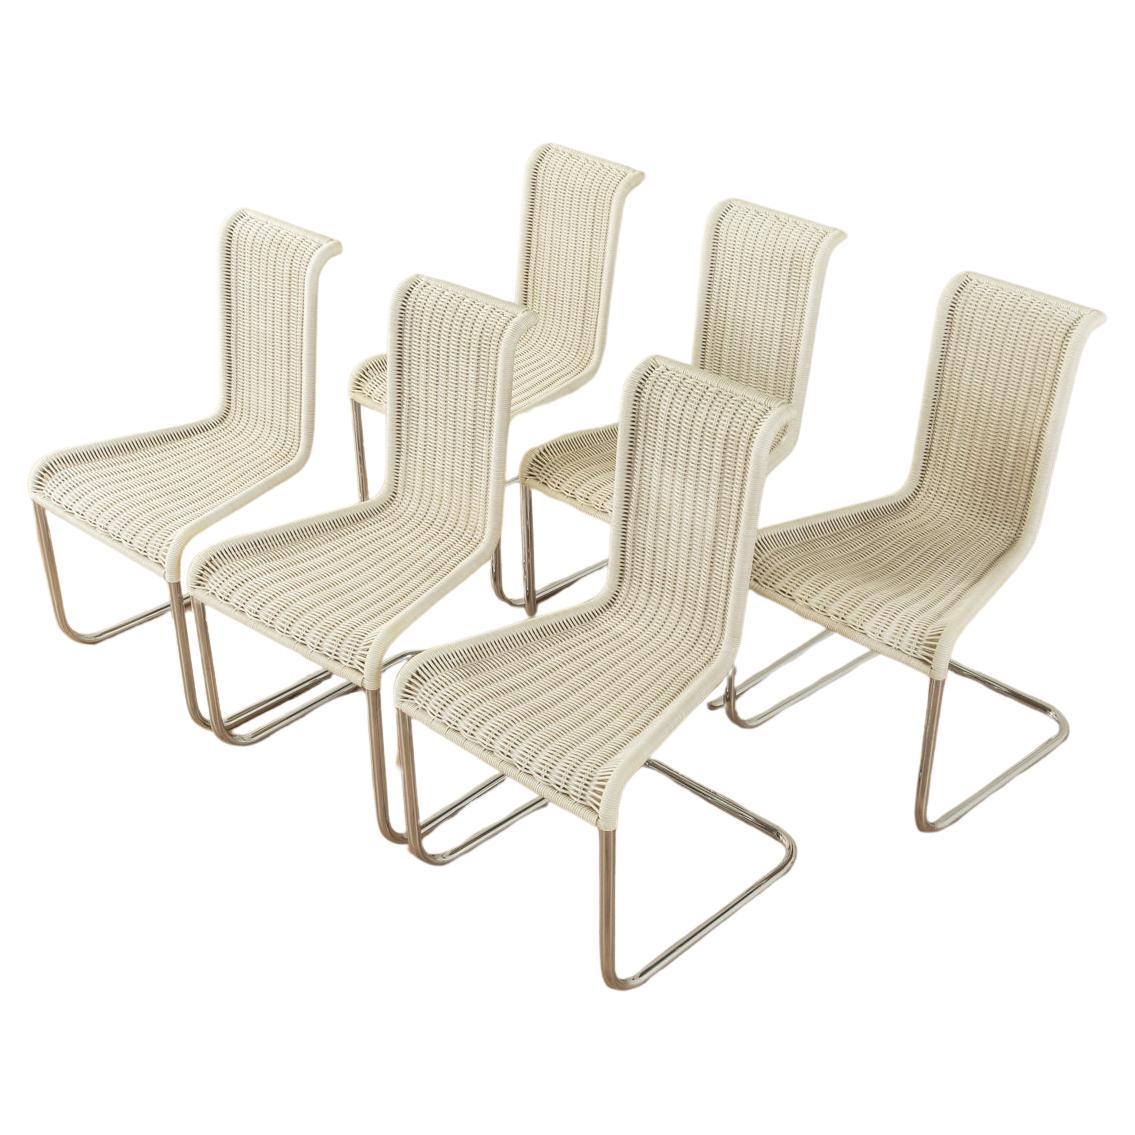 B20 cantilever chairs, Marcel Breuer, Tecta